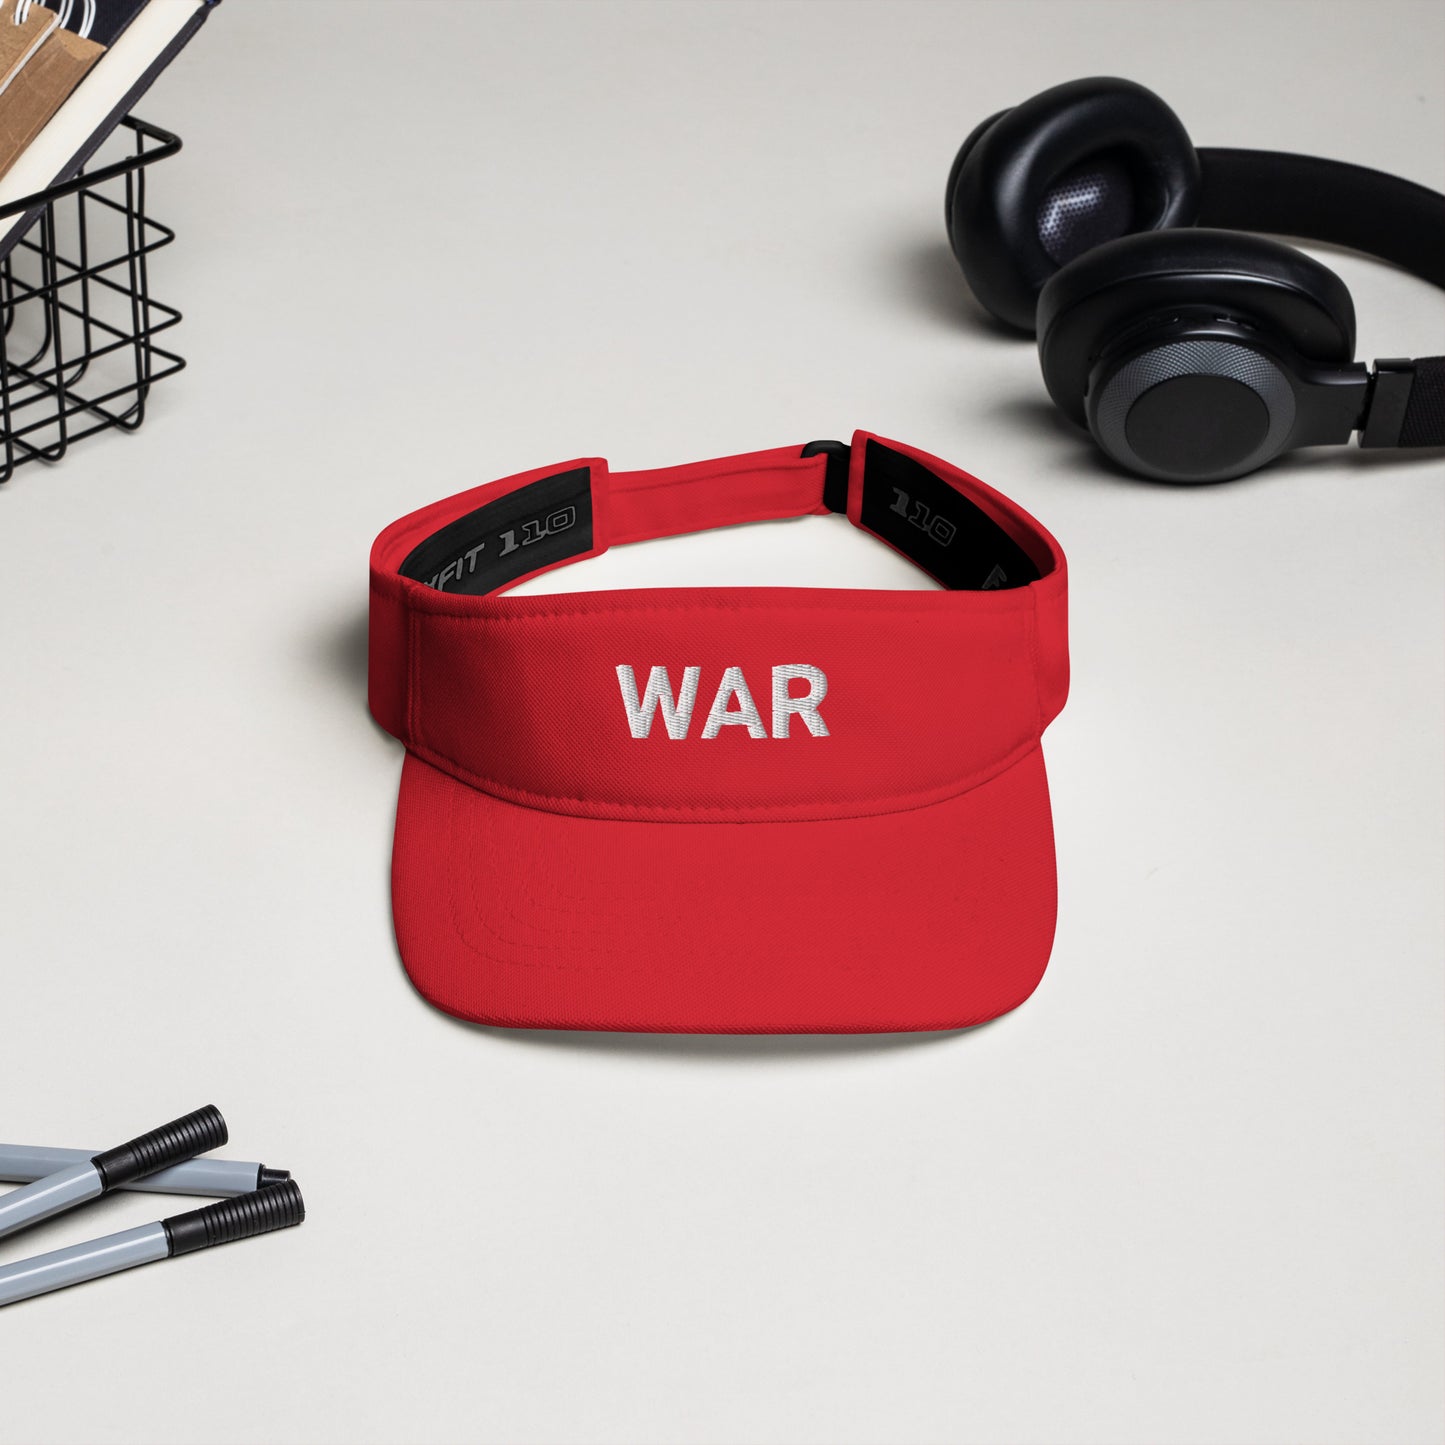 Marvin Hagler War hat / Dustin Poirier War Hat / War Visor